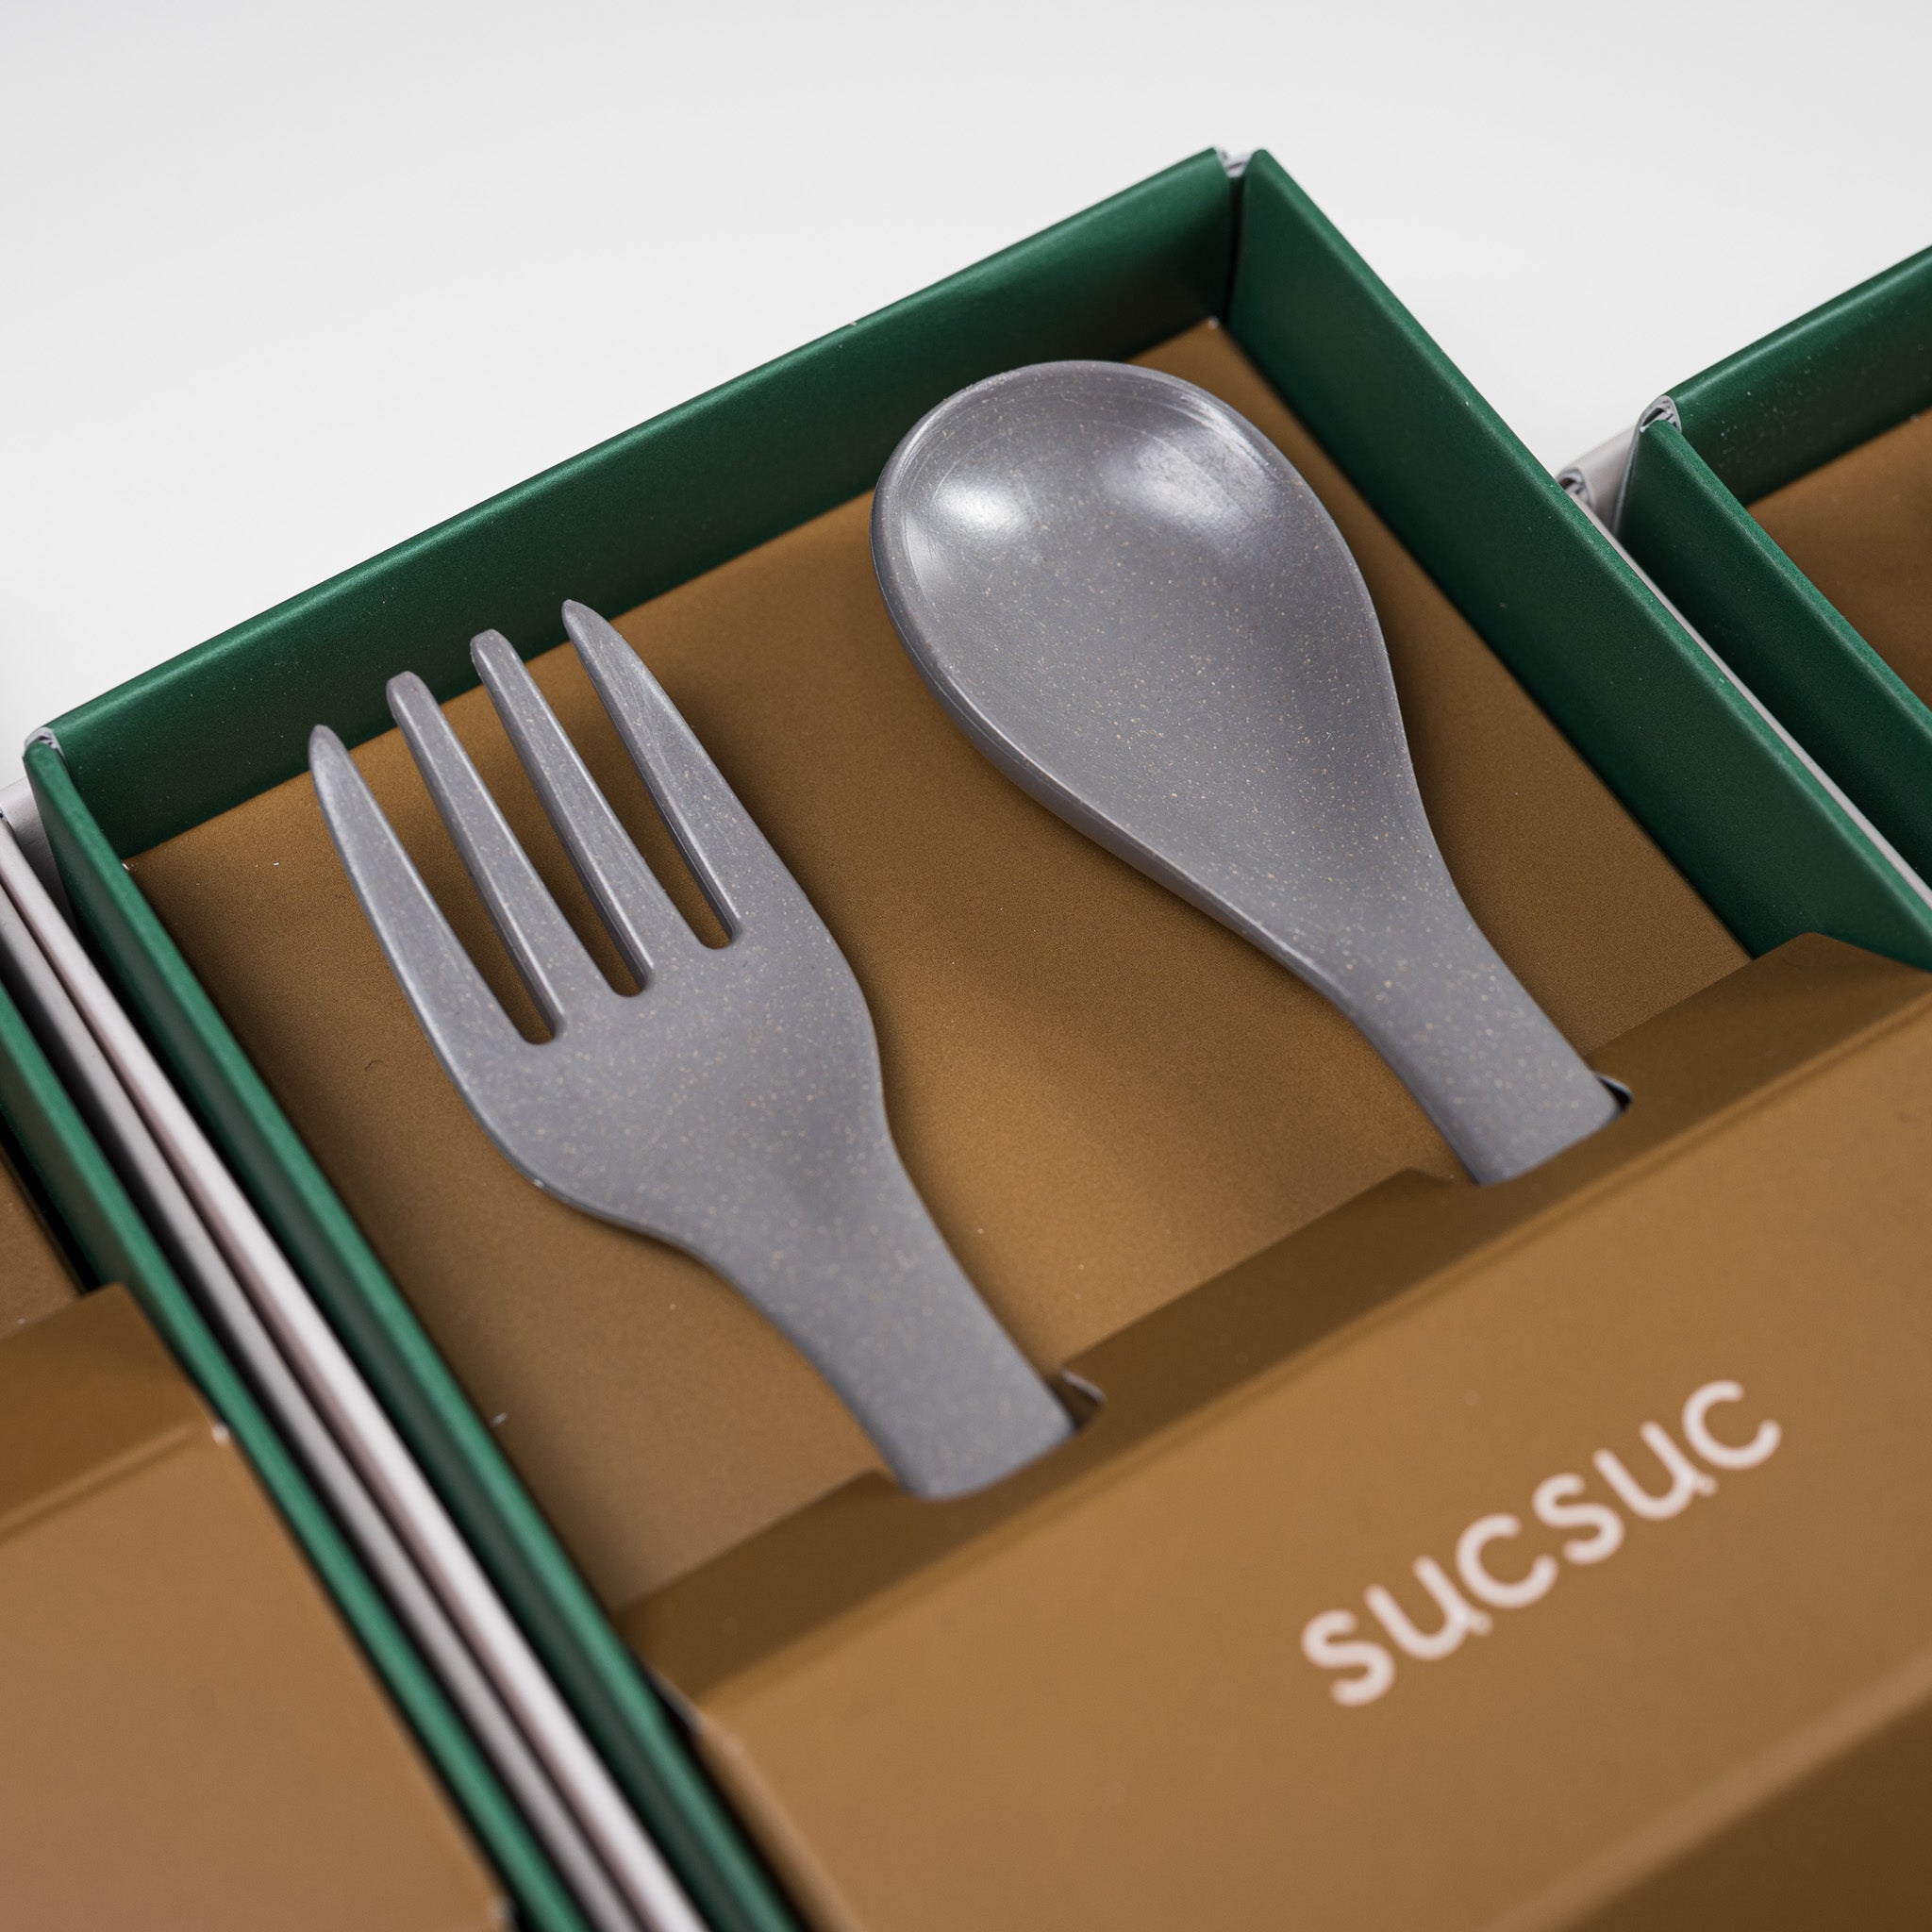 "SUCSUC" Antibacterial Kids Cutlery Set - 3 Colour Options